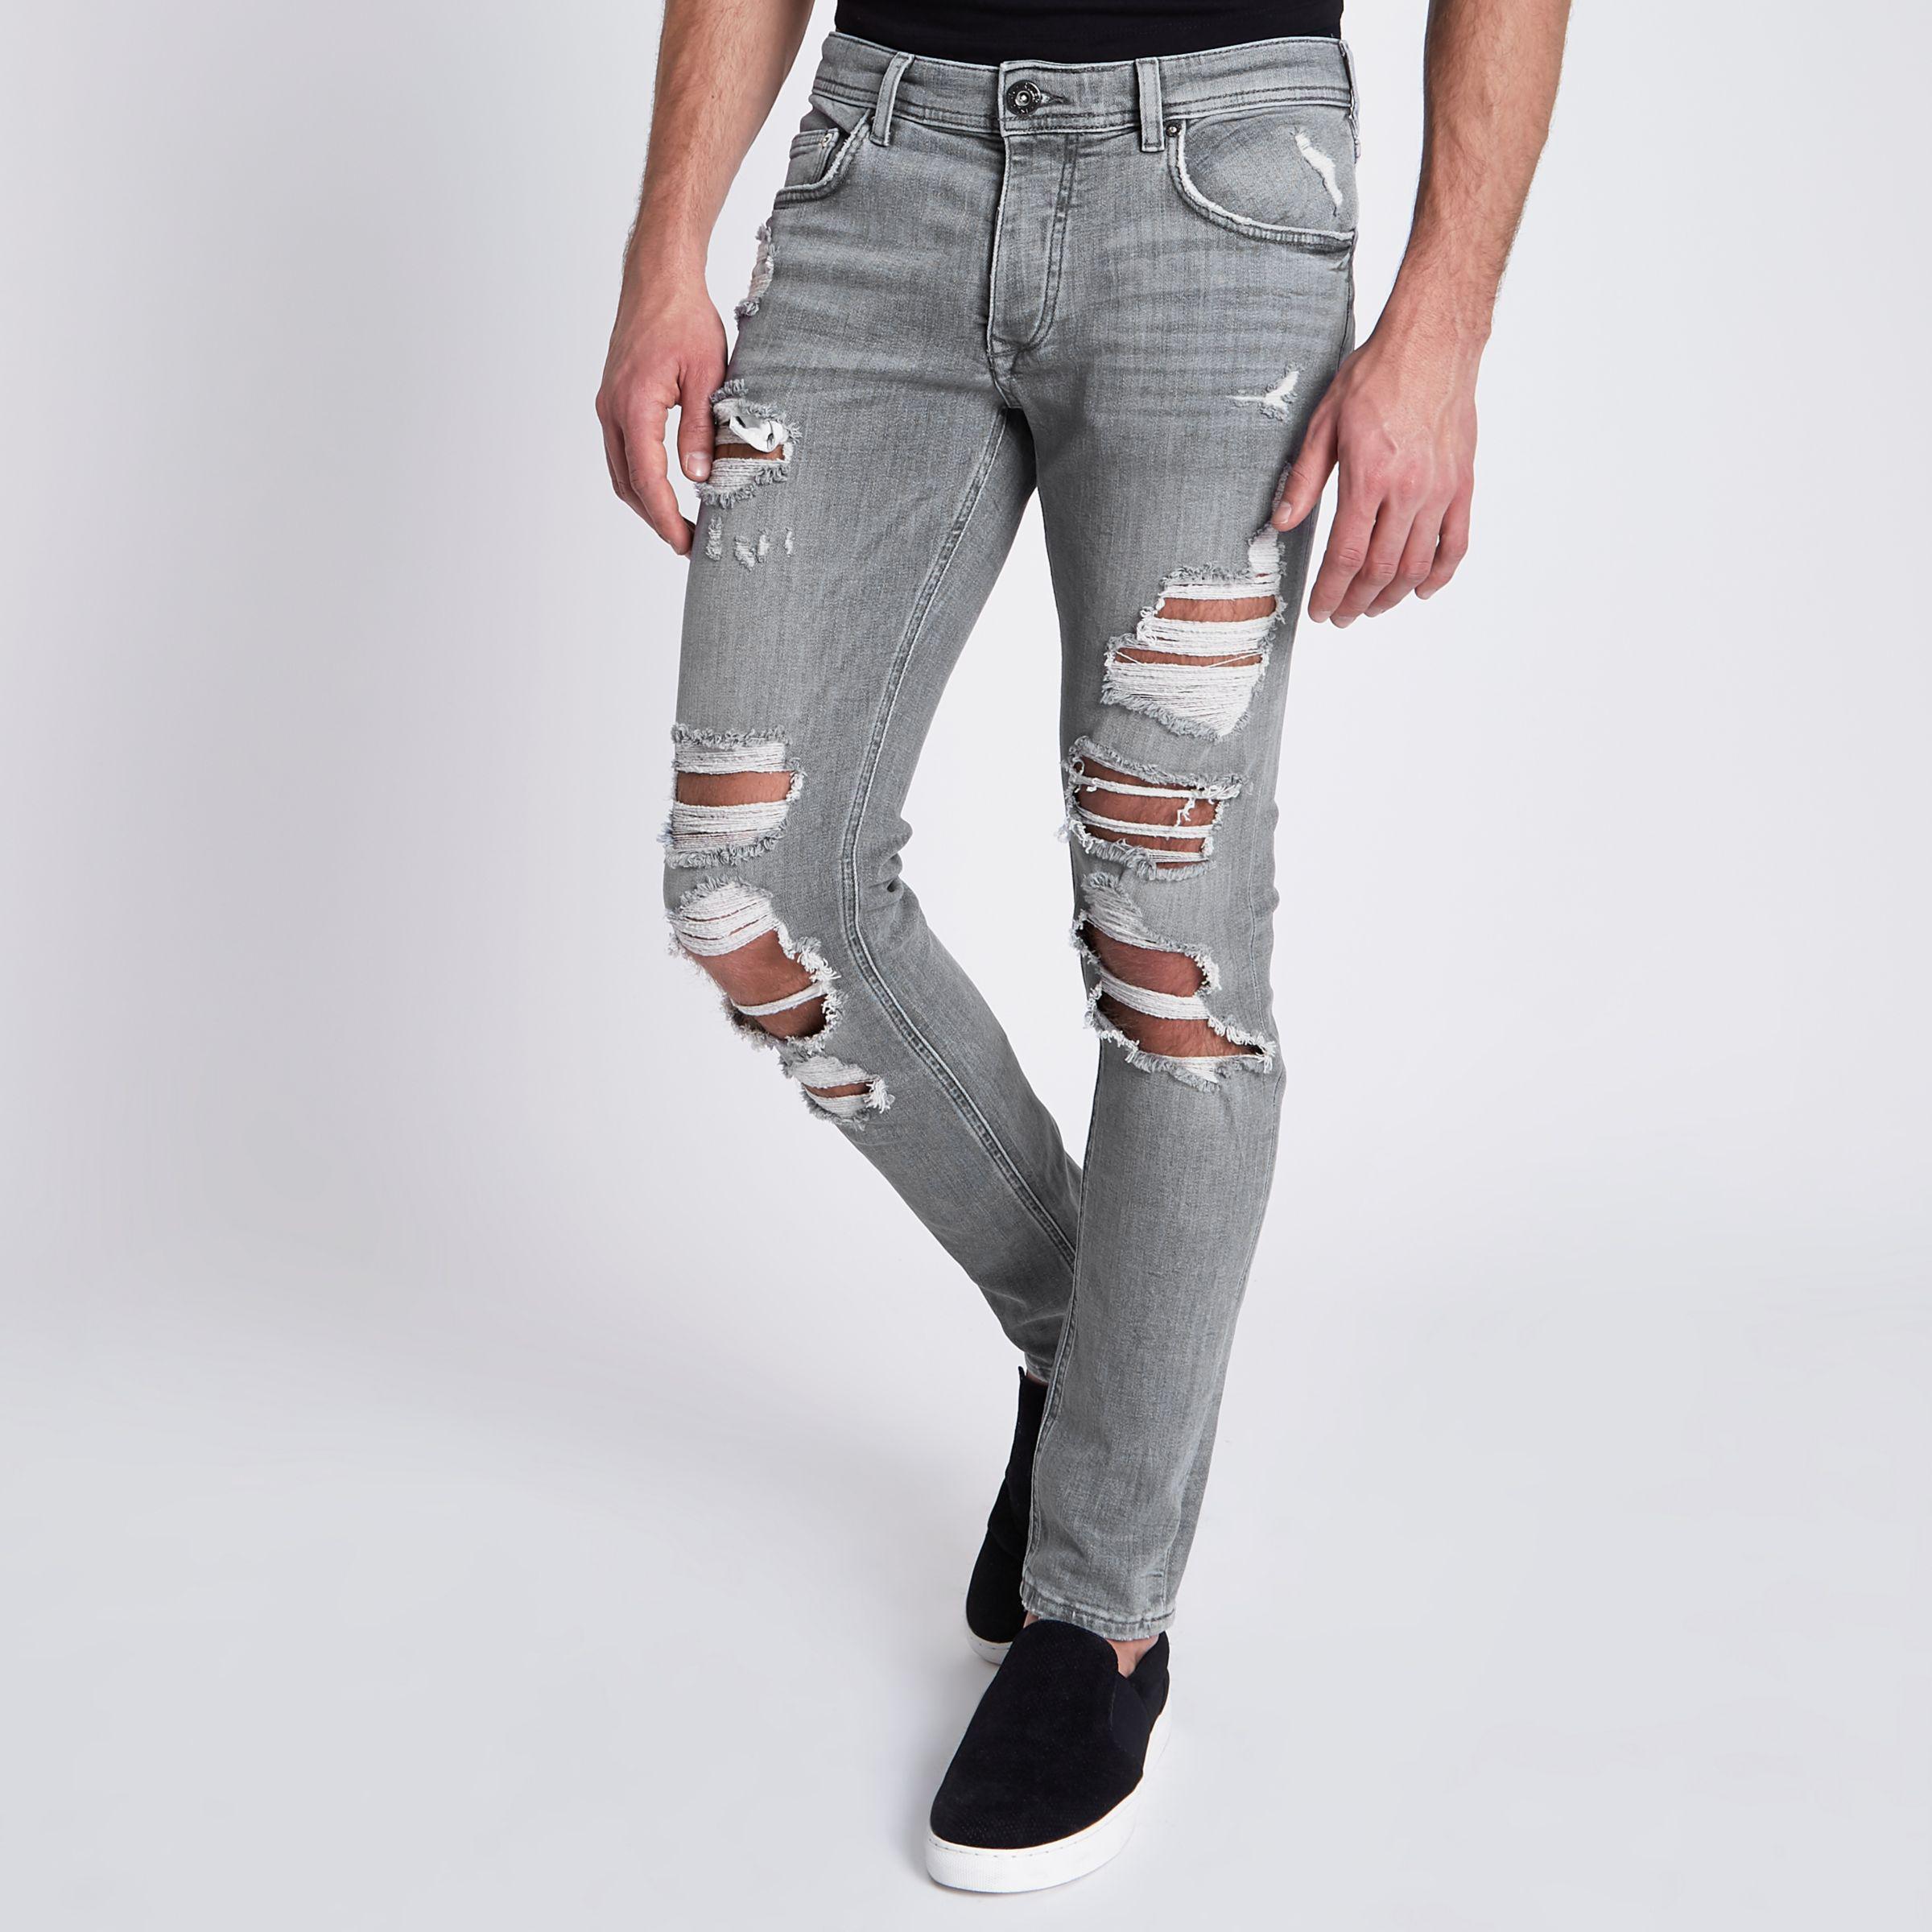 River Island Denim Sid Ripped Skinny Jeans in Grey (Gray) for Men - Lyst